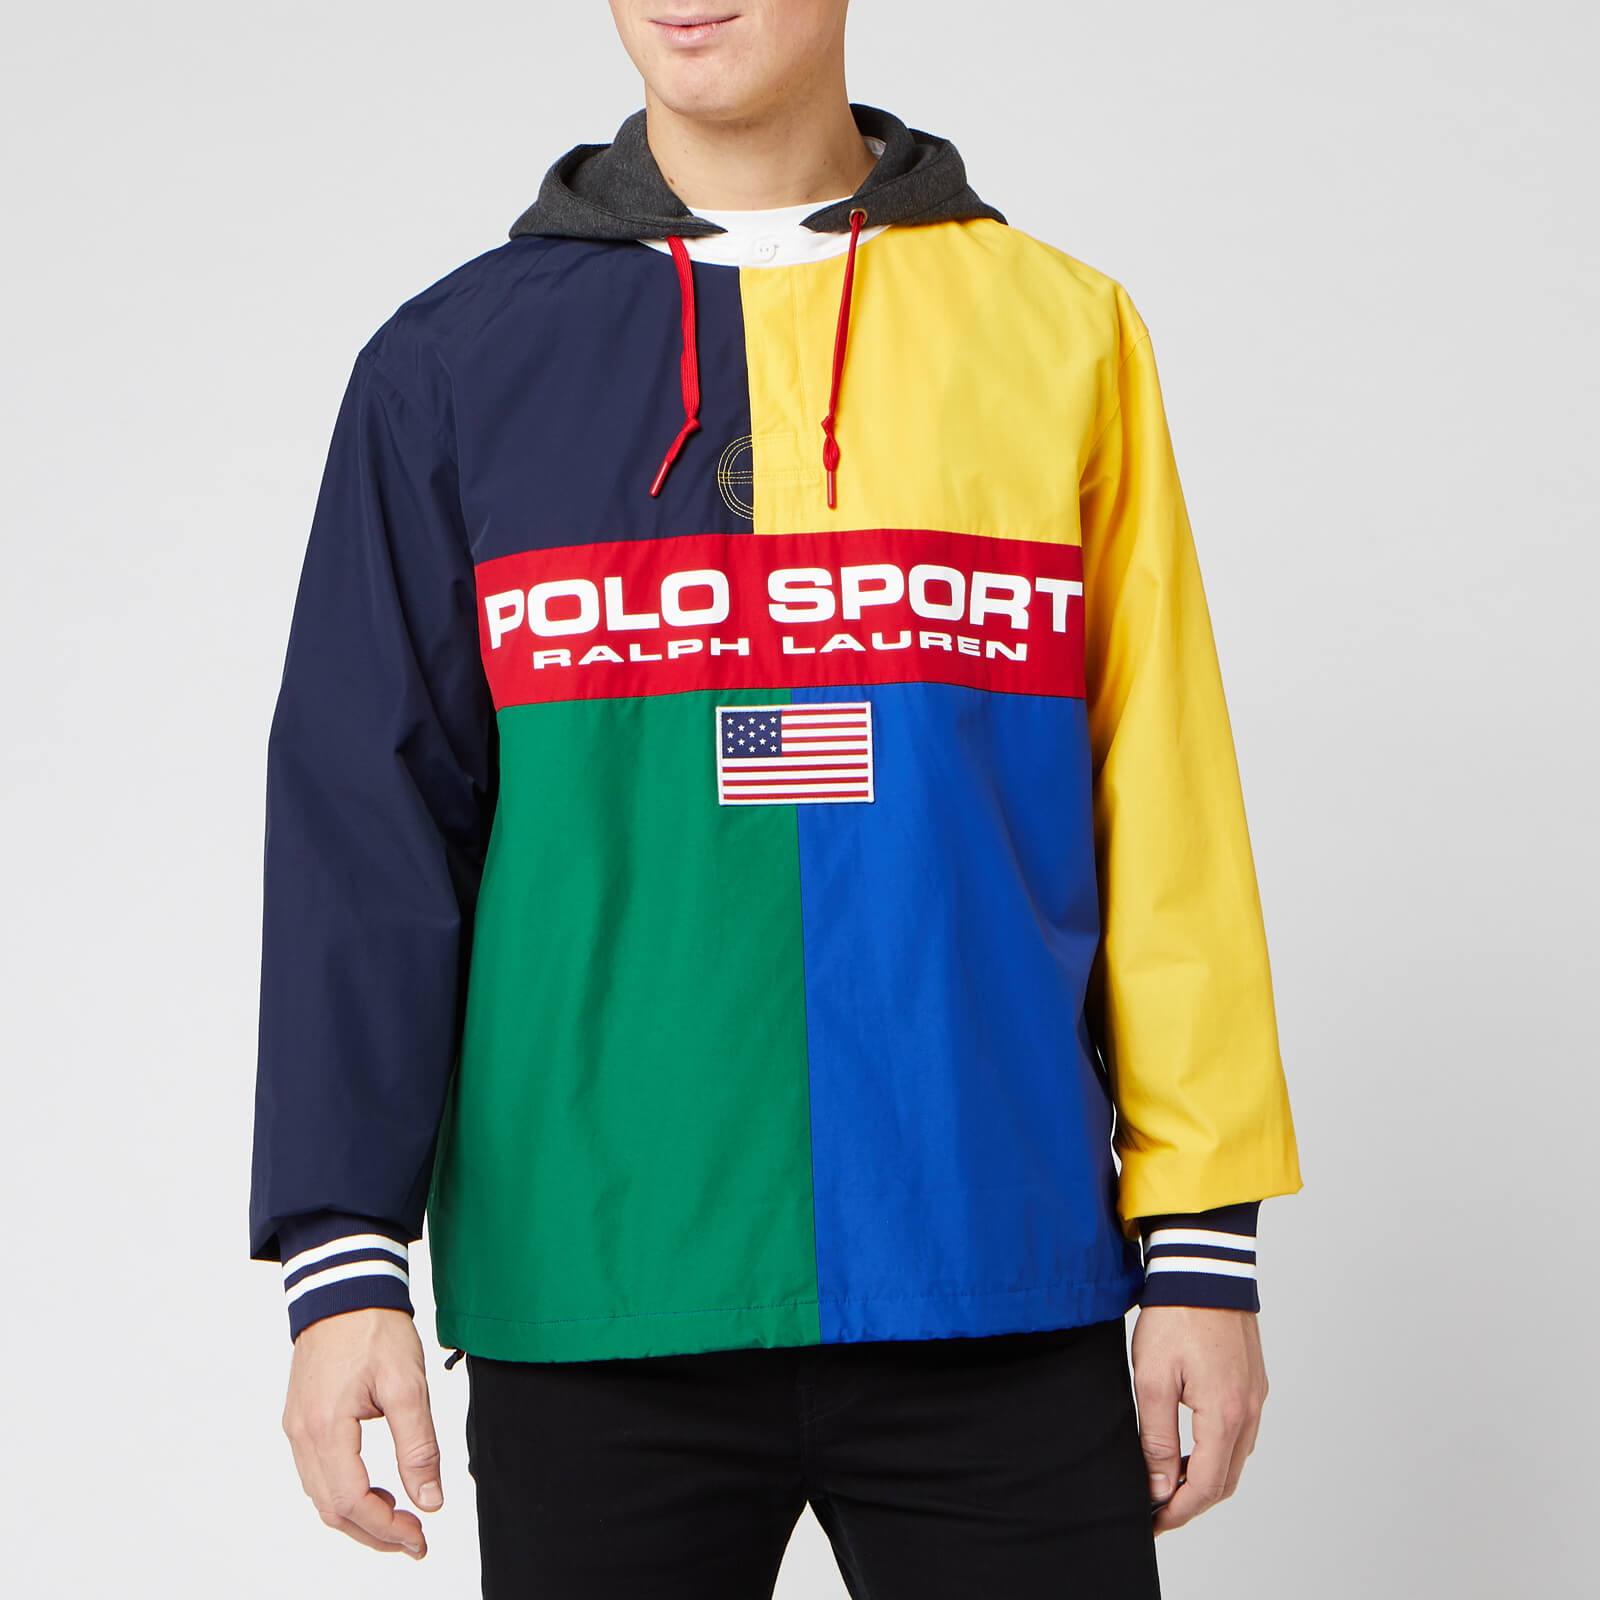 polo sport ralph lauren jacket